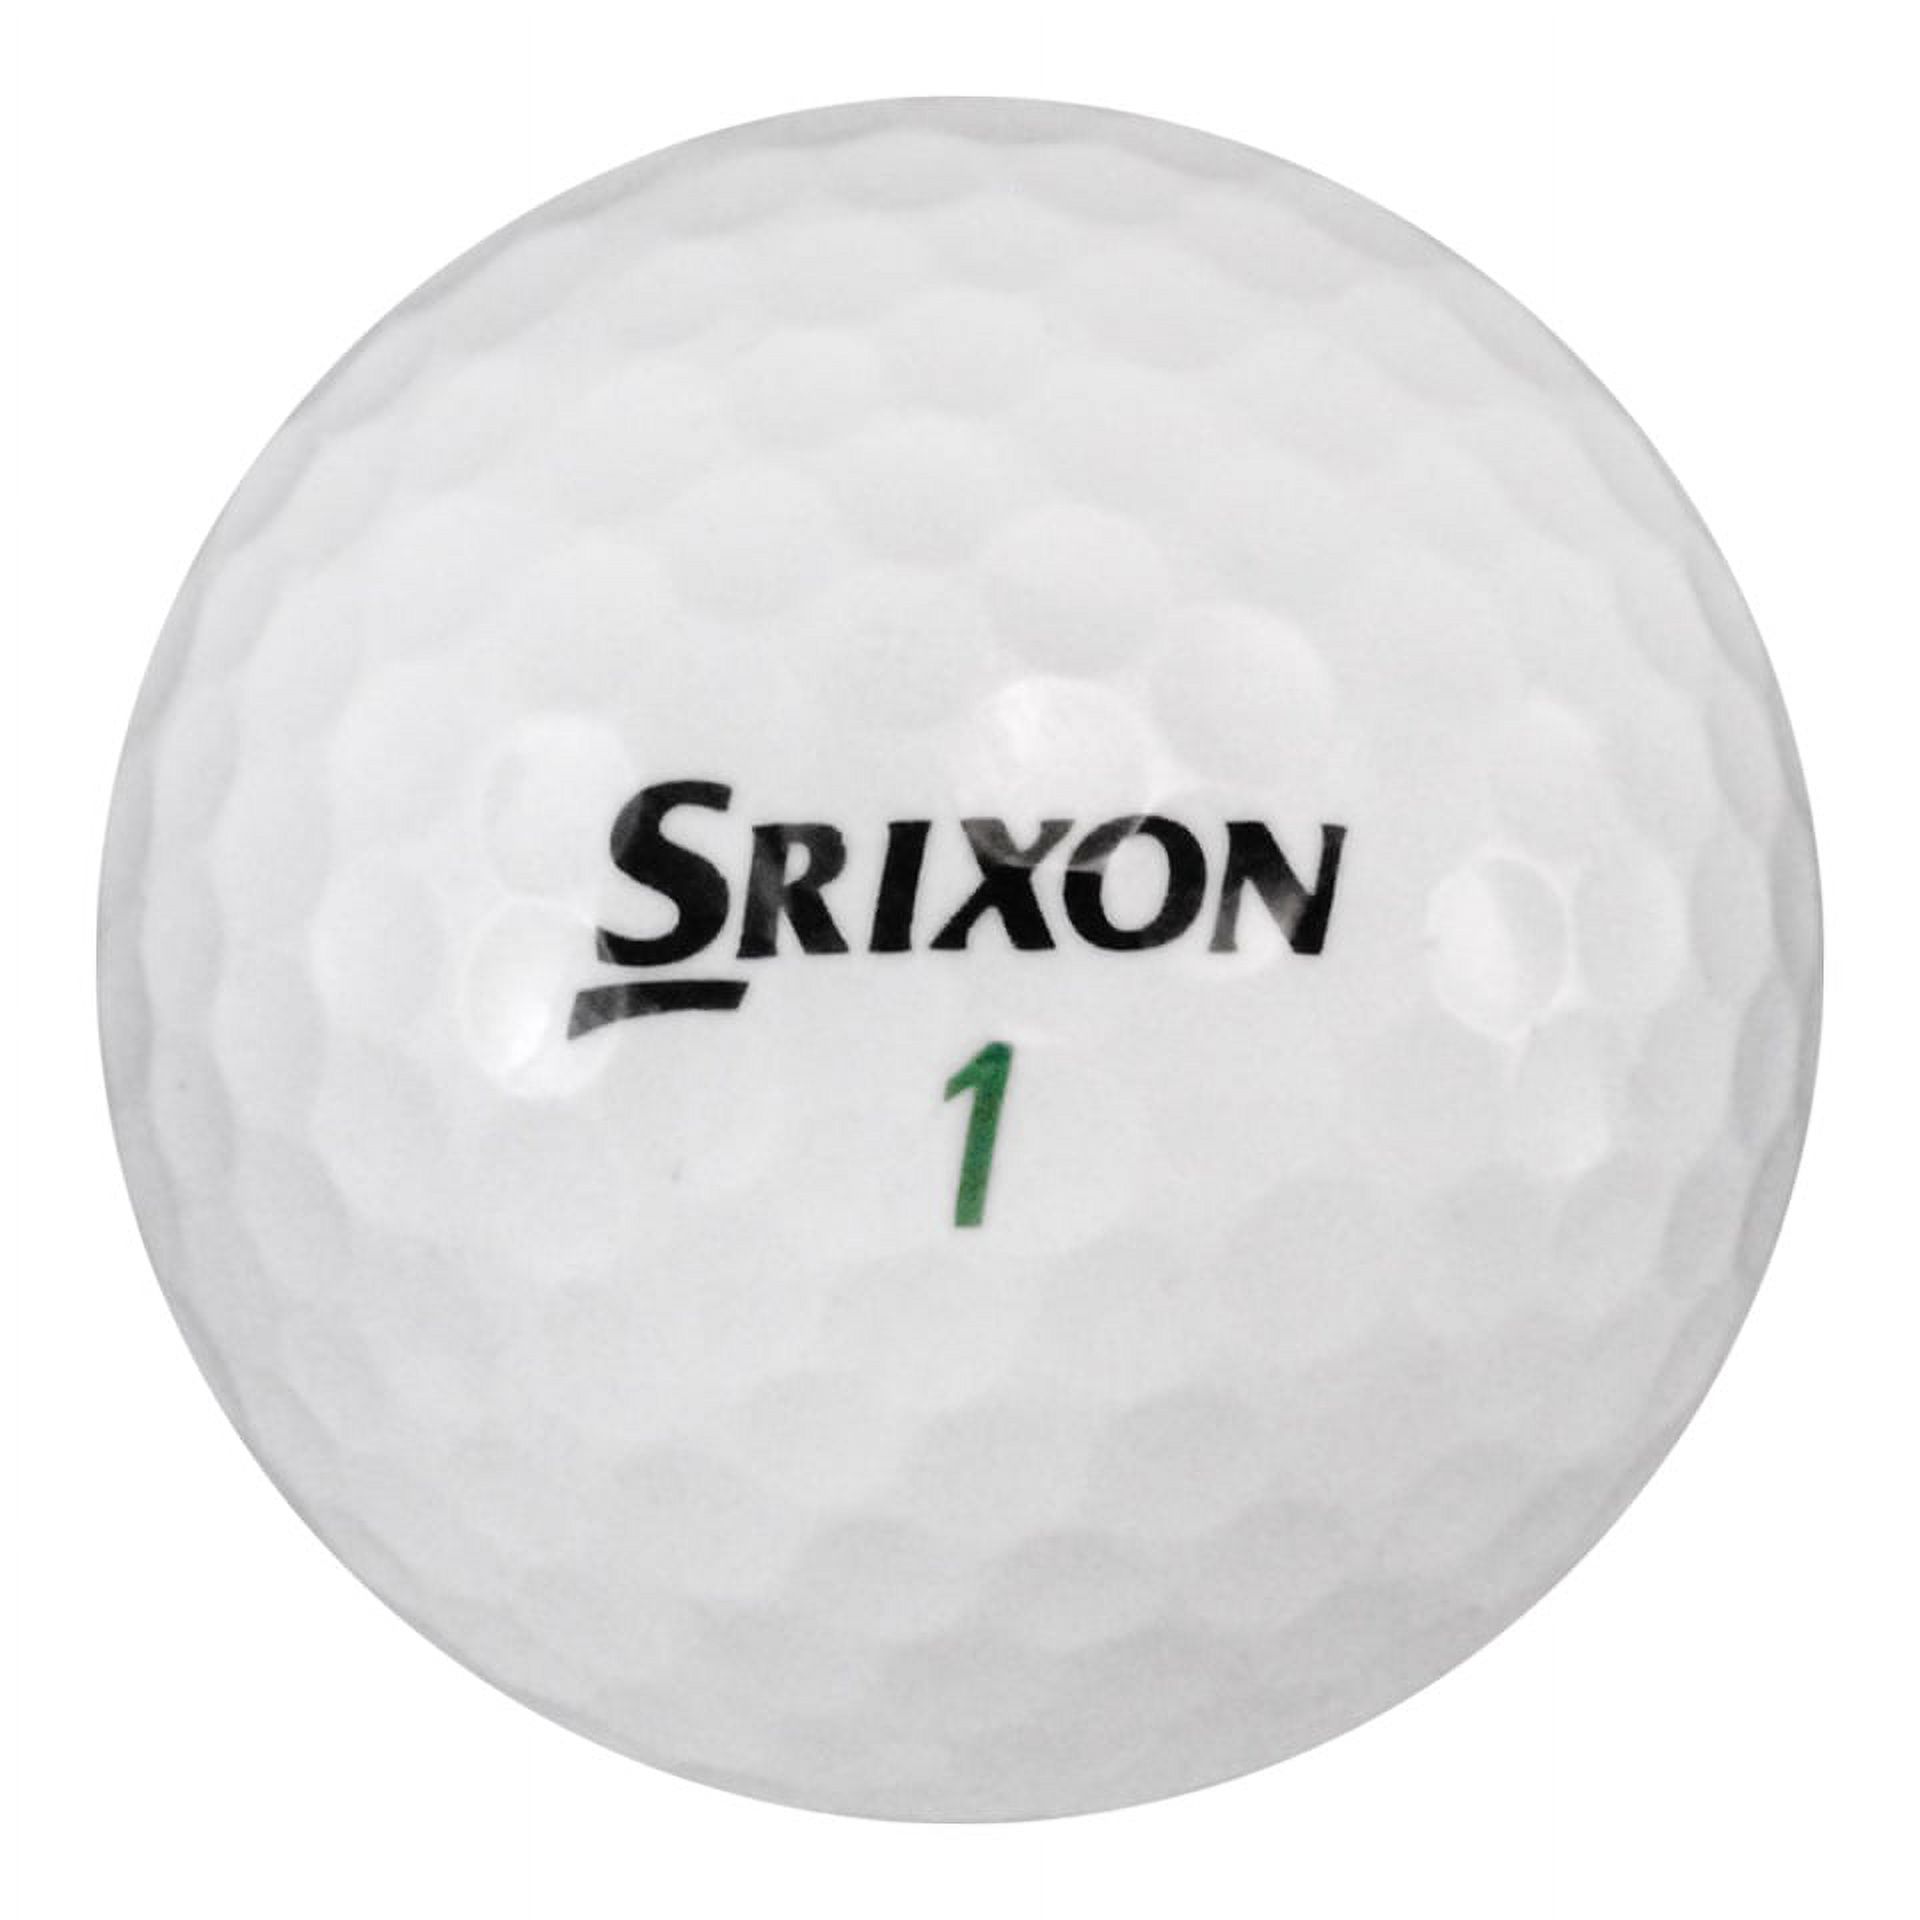 Srixon Golf Balls, Assorted Colors, Used, Mint Quality, 24 Pack - image 1 of 8